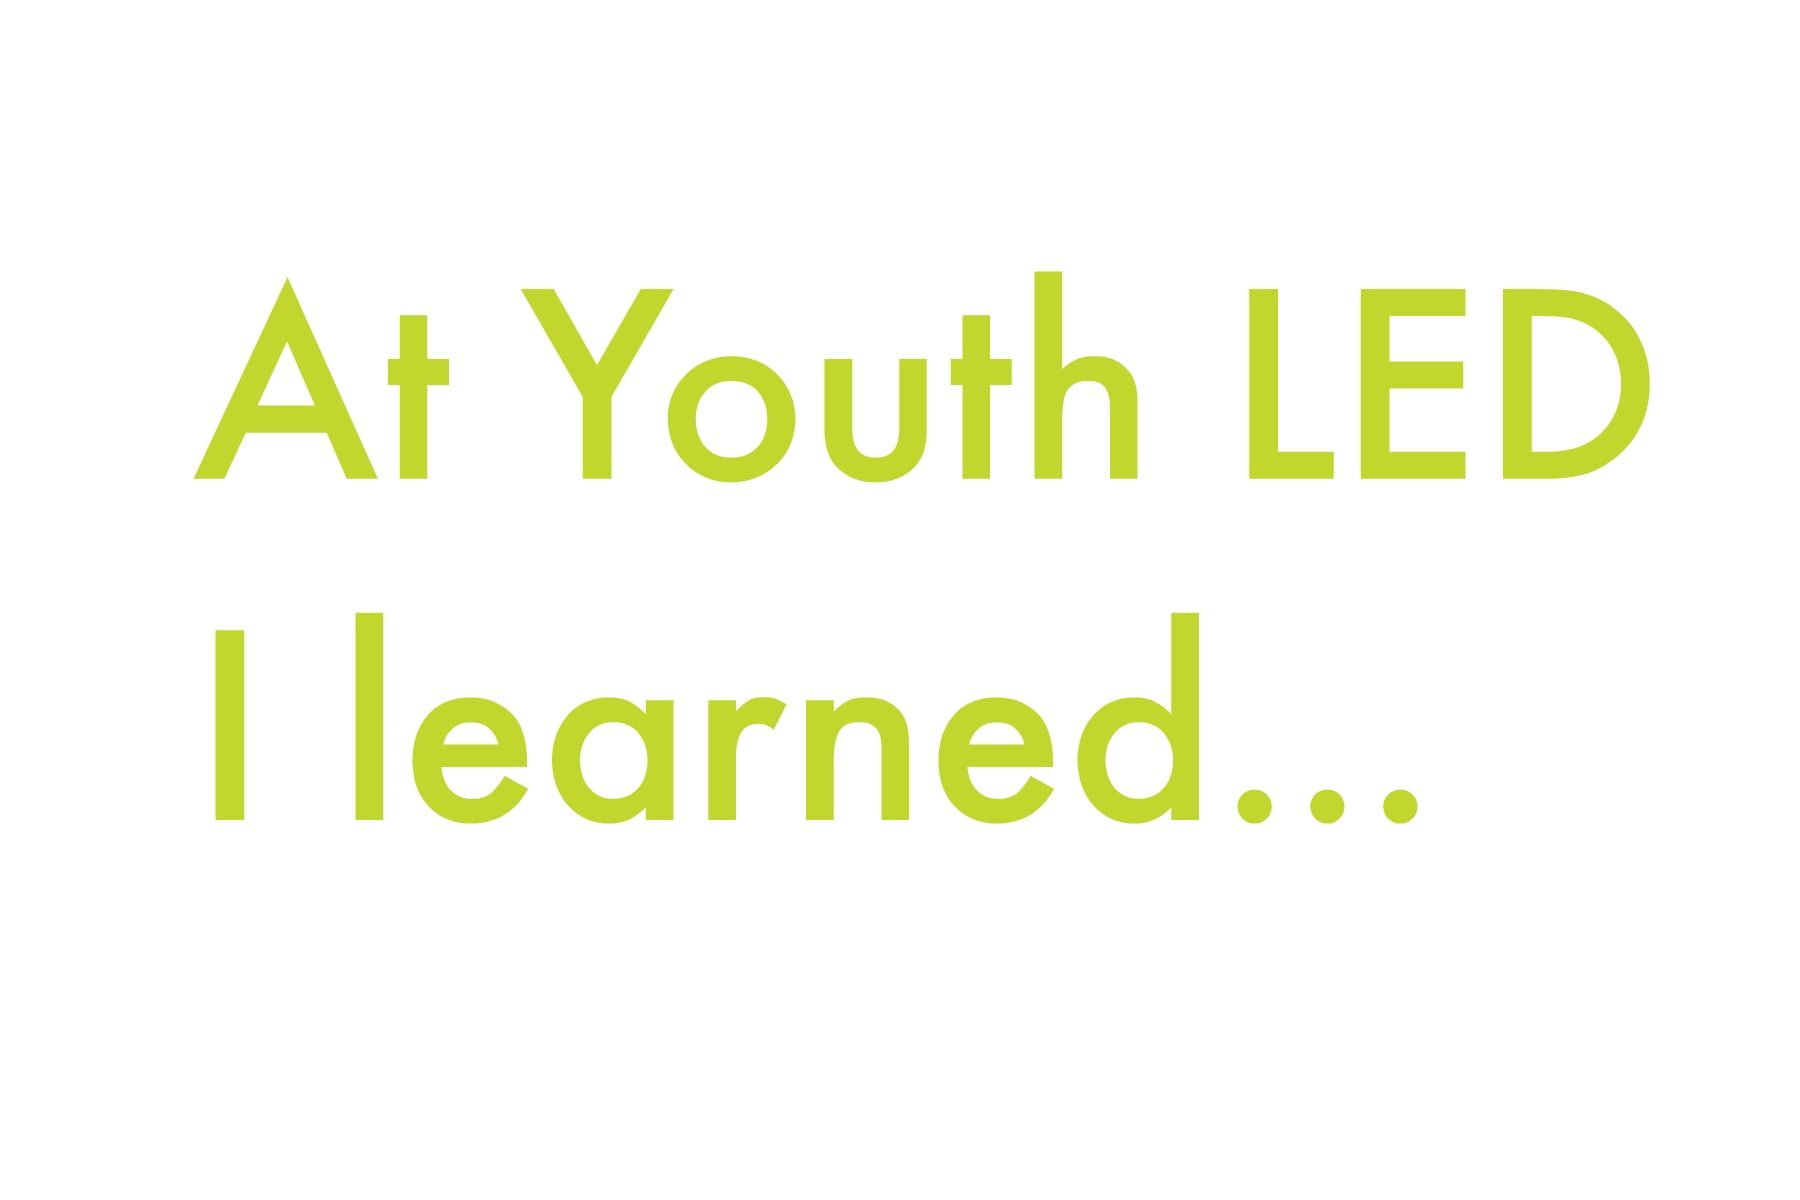 At Youth LED I learned...